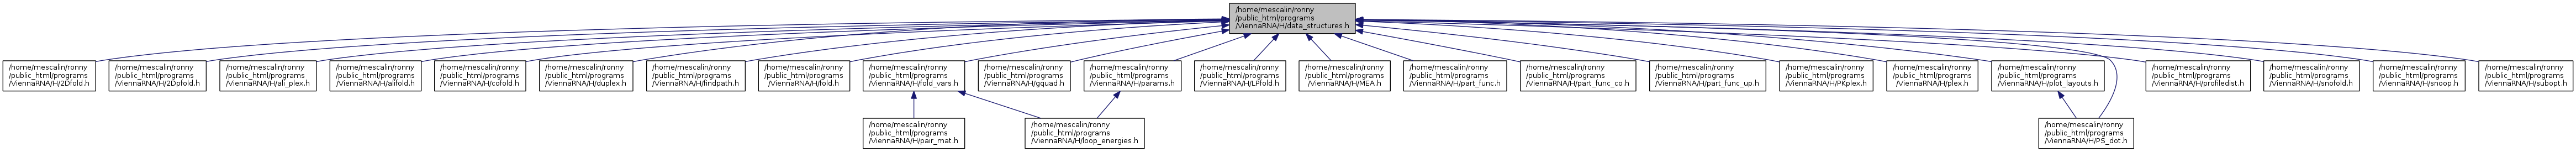 binaries/src/ViennaRNA/doc/html/data__structures_8h__dep__incl.png